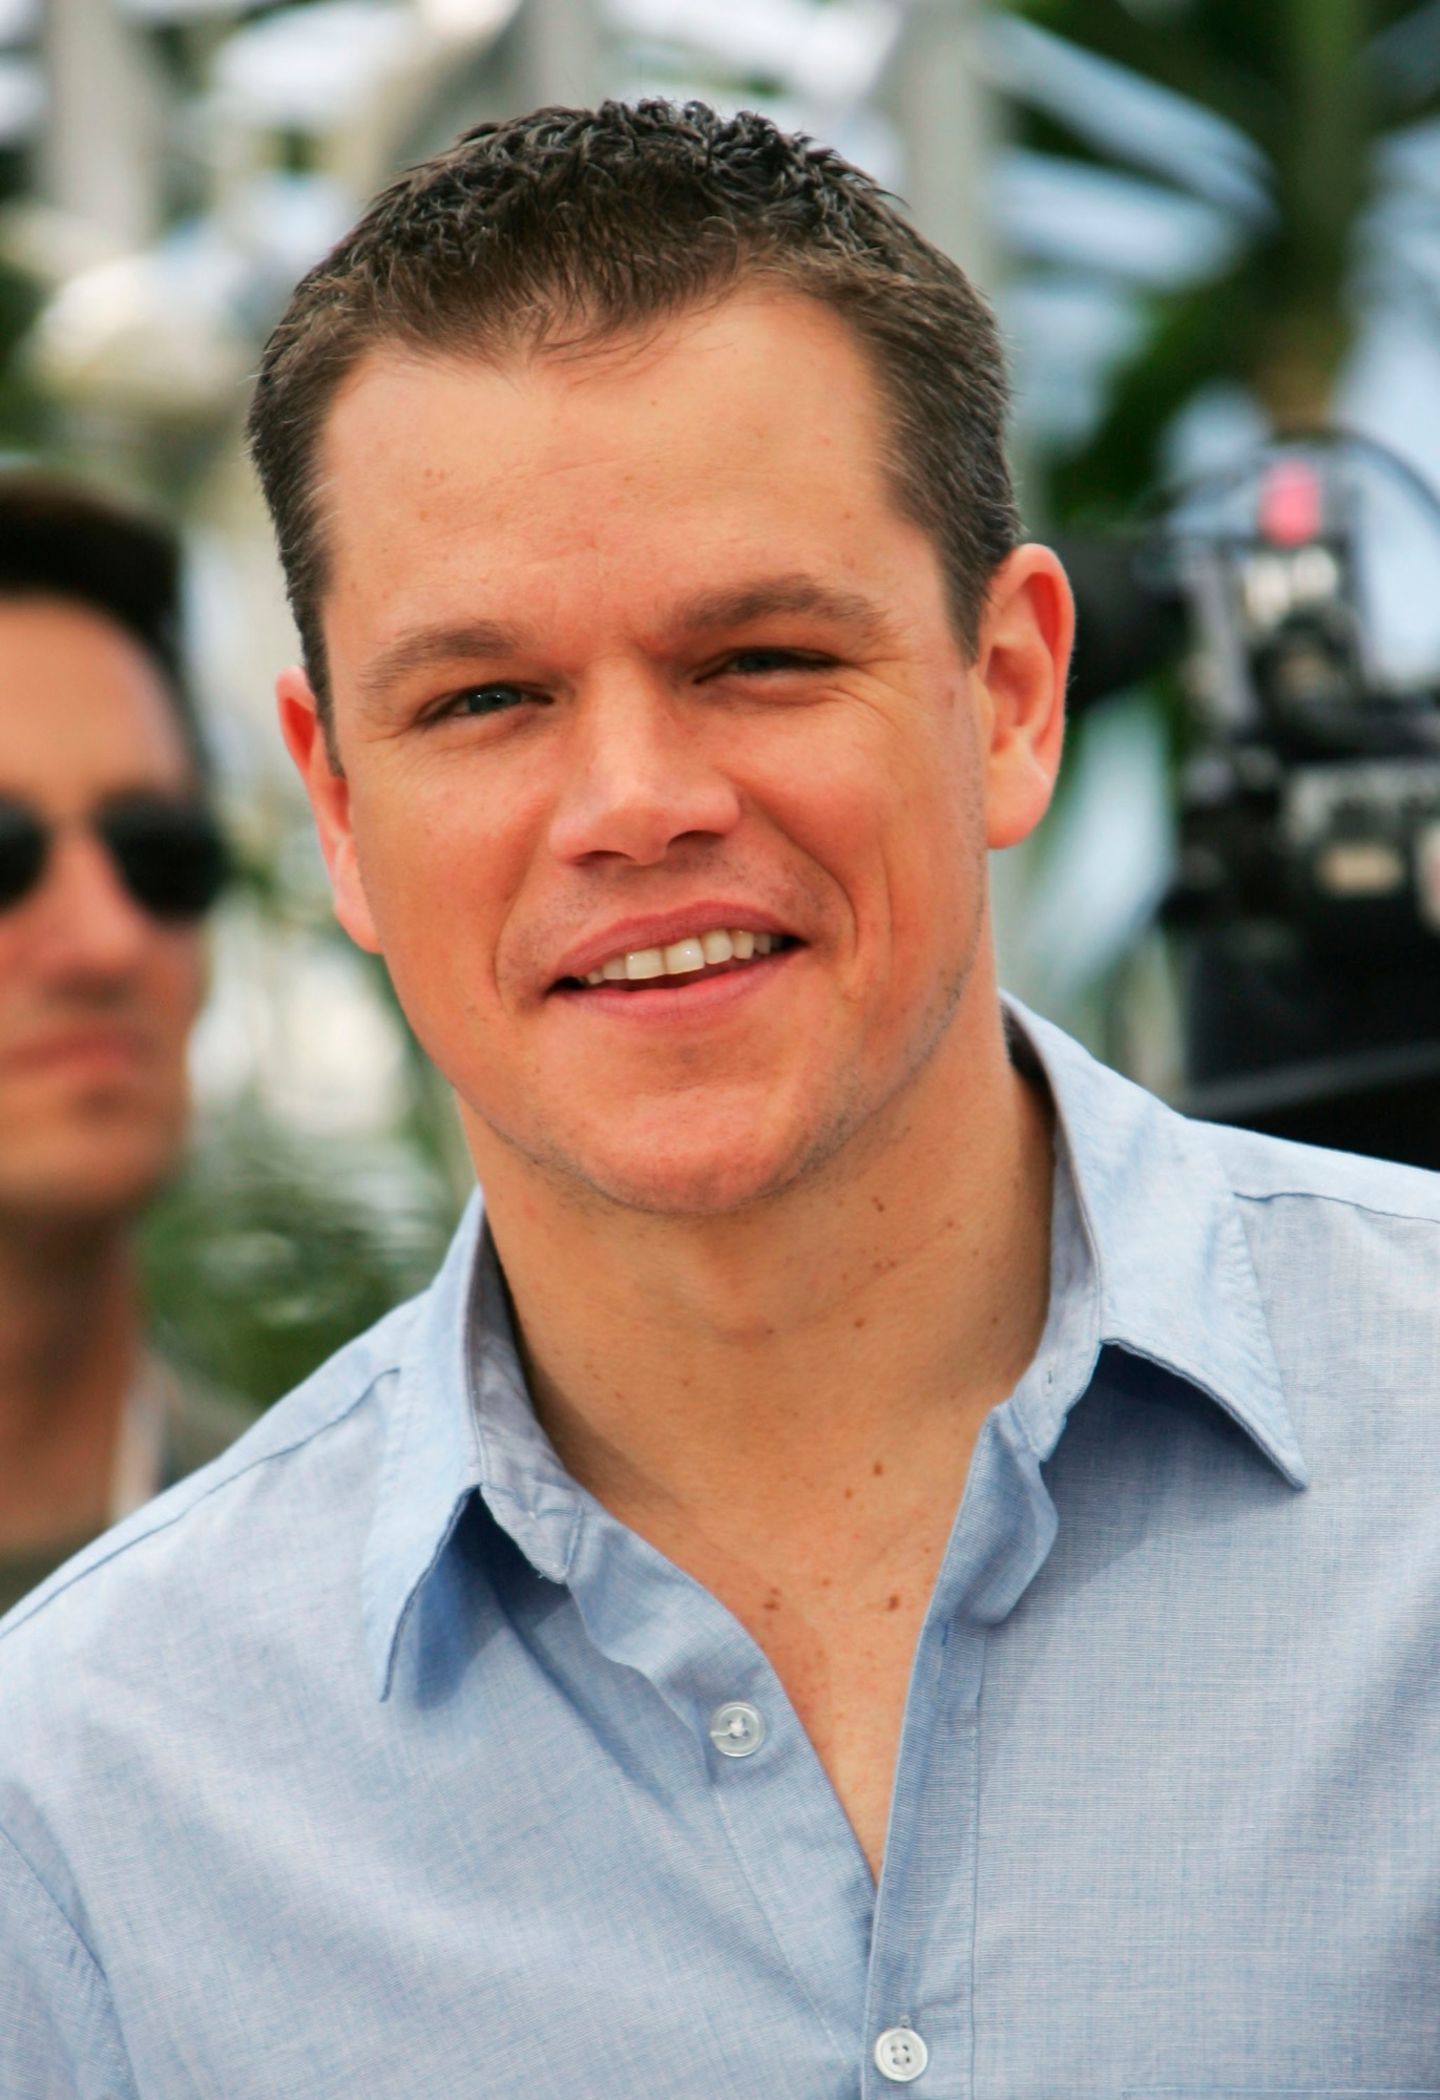 Sexiest Man Alive 2007 - Matt Damon